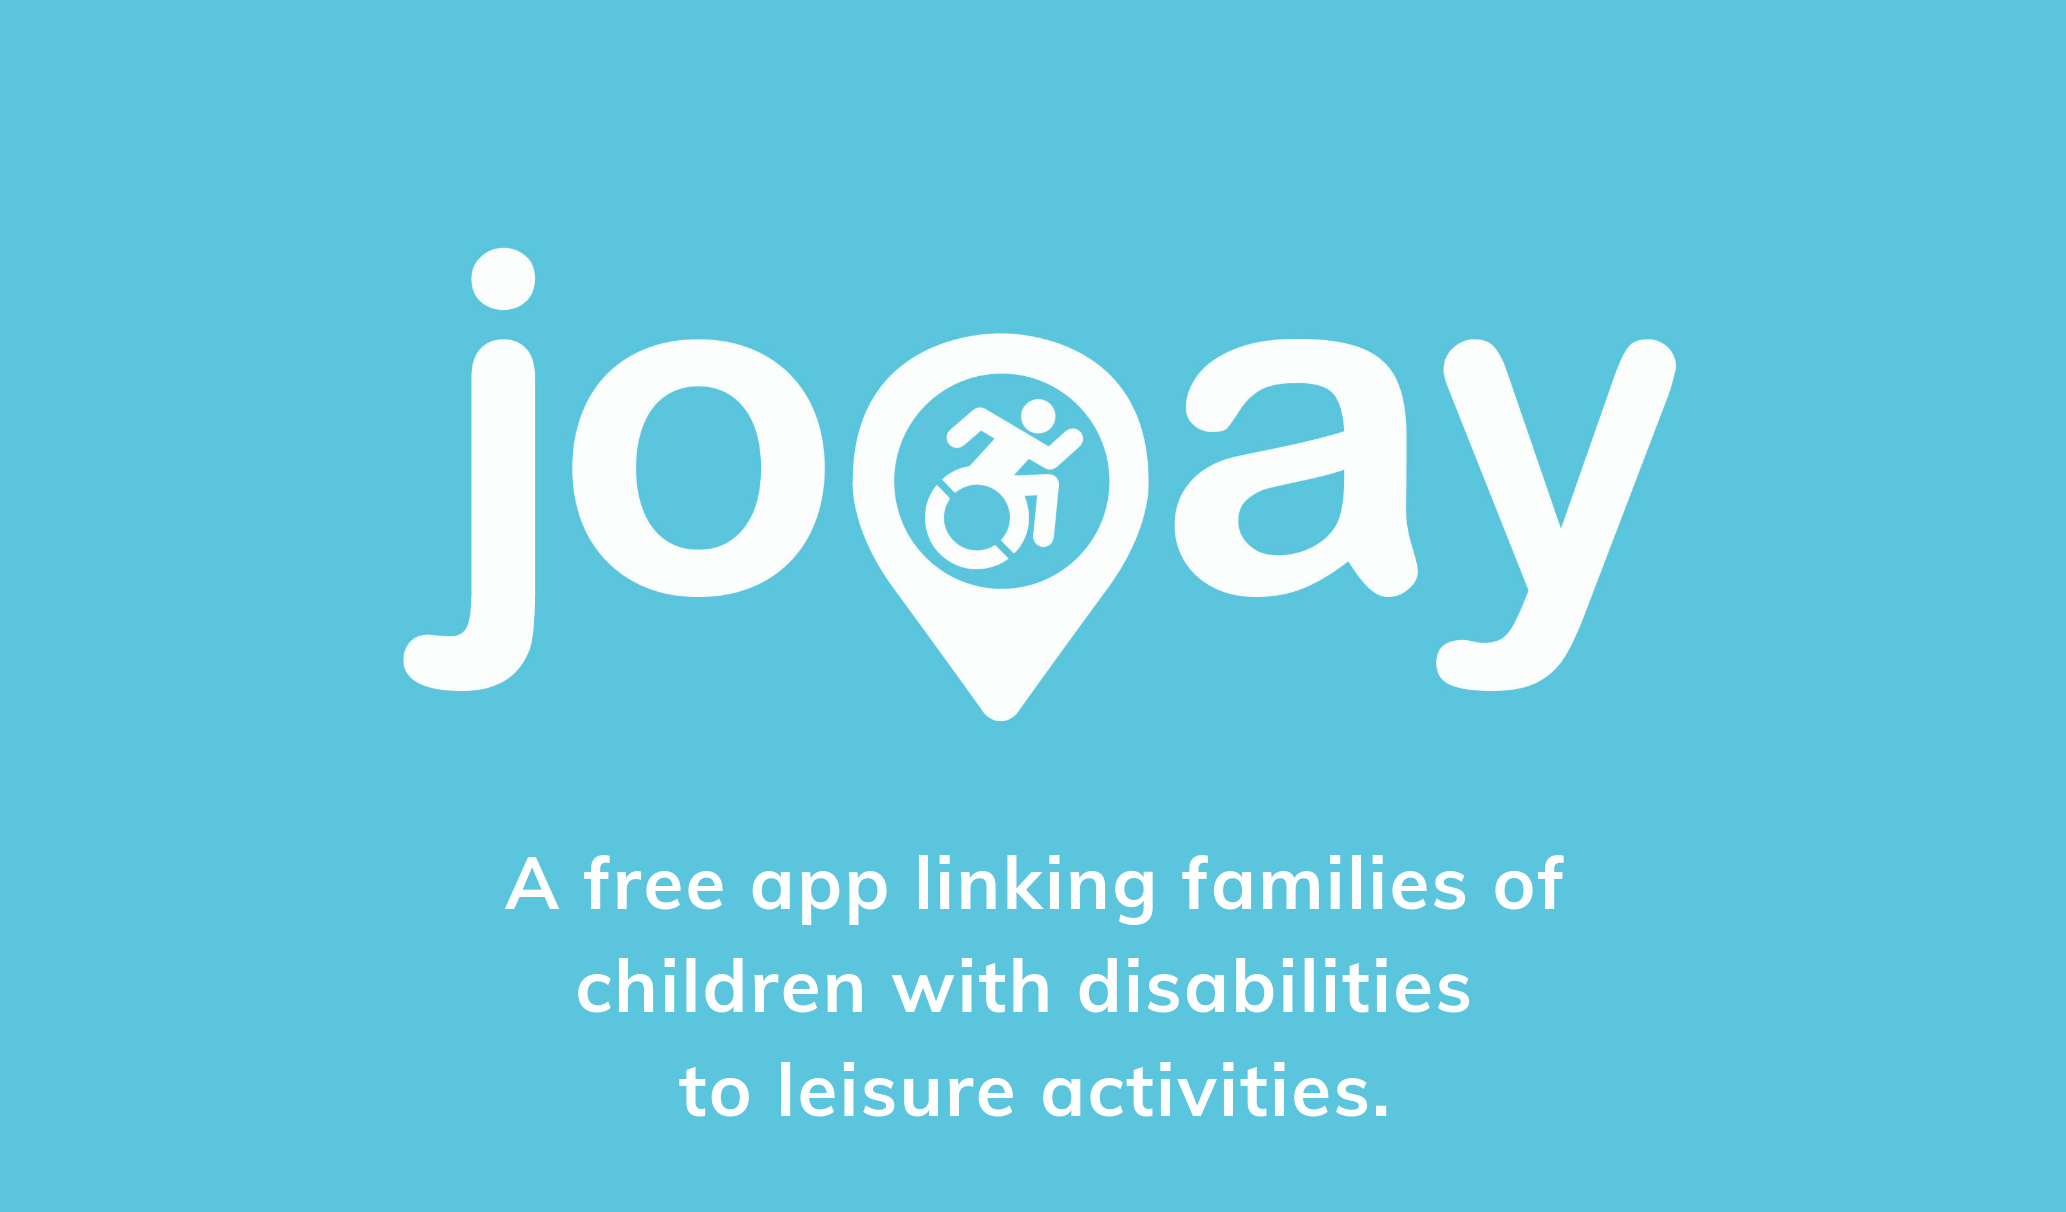 The Jooay App